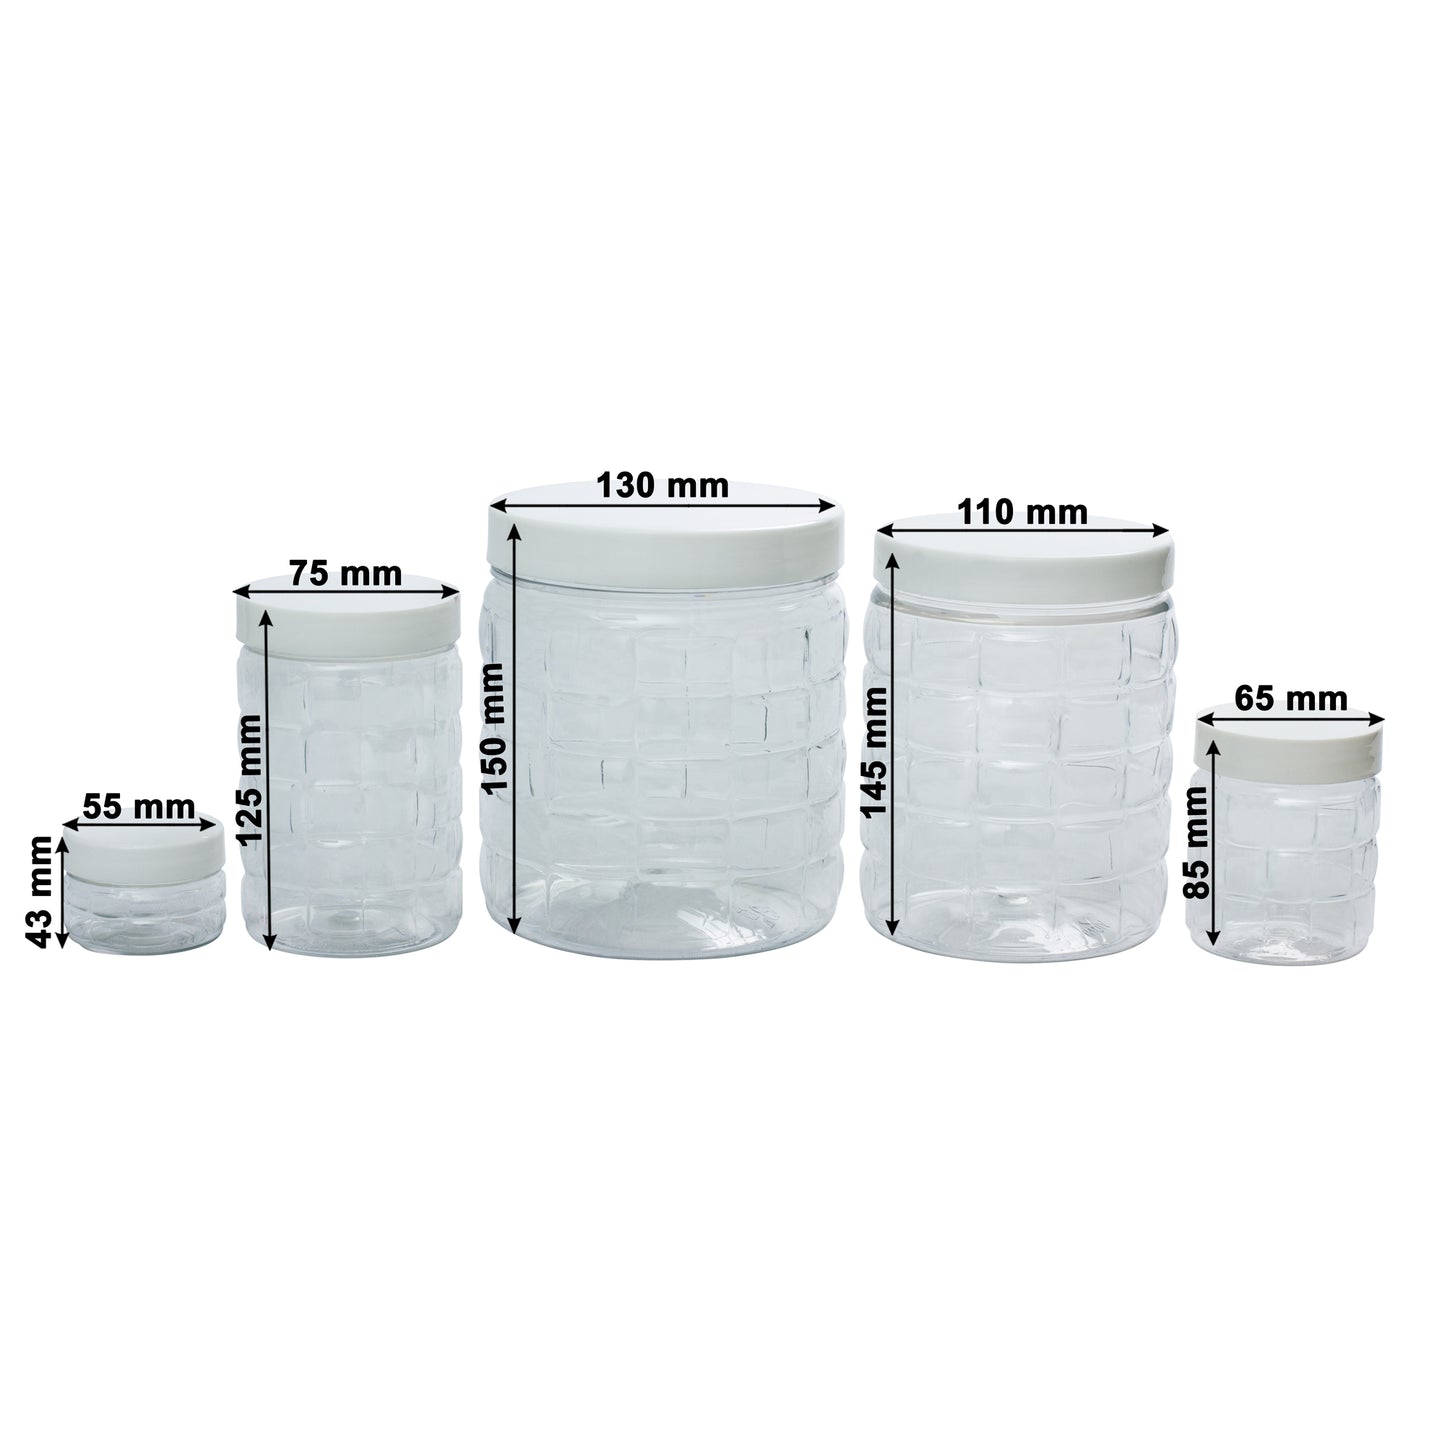 Checkers Jars Plastic Container White Cap (Set of 15) 1800ml, 1200ml, 450ml, 200ml, 50ml